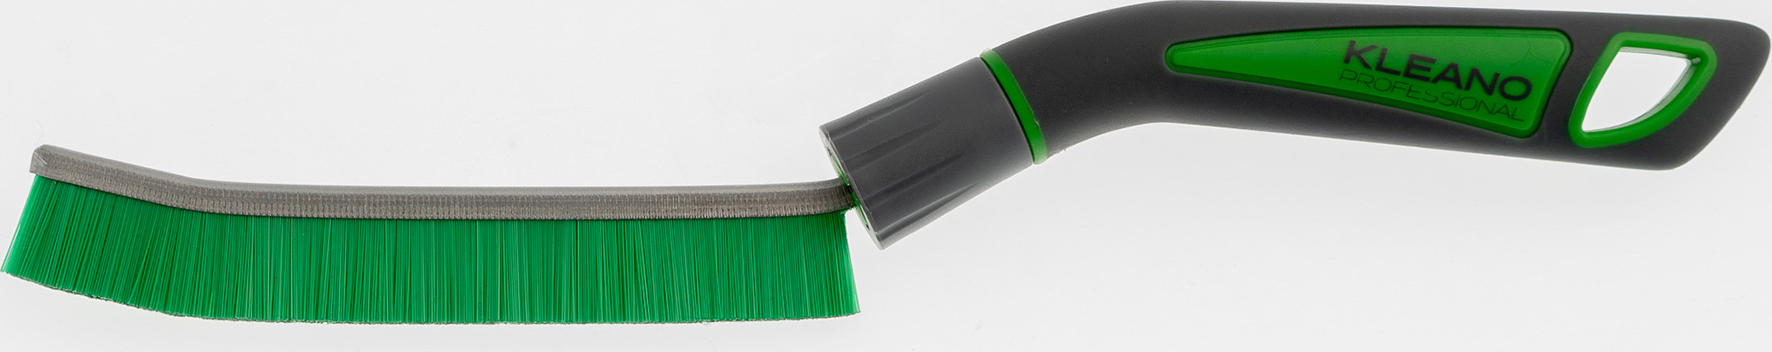 [8552293] Detaljborste Smart Brush grön